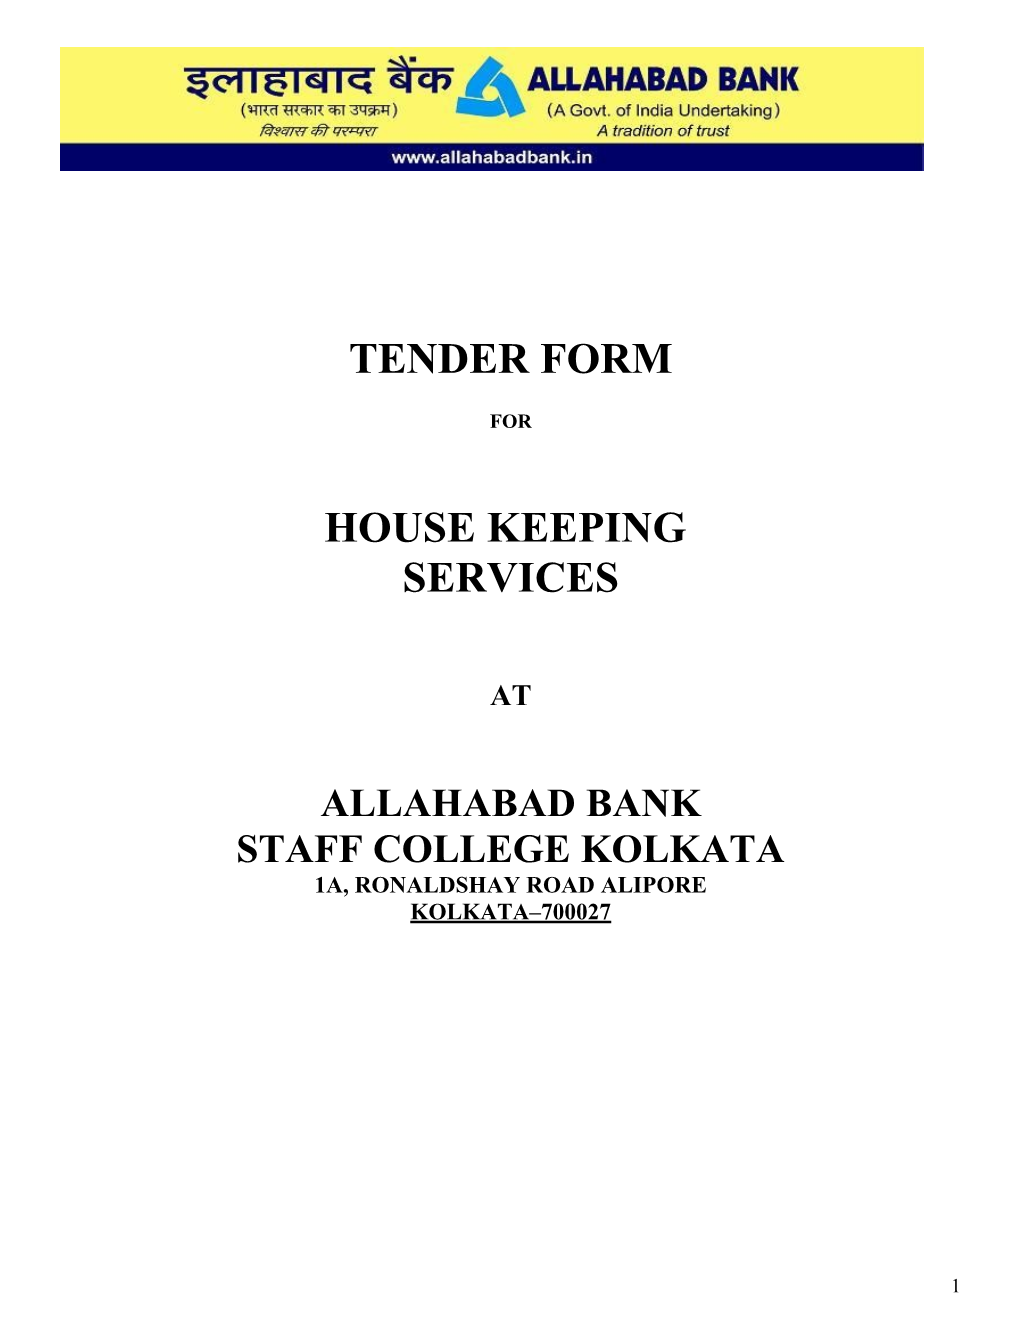 Tender Form for Housekeepingservices Atstaff College, 1 A, Ronaldshay Road, Alipore, Kolkata